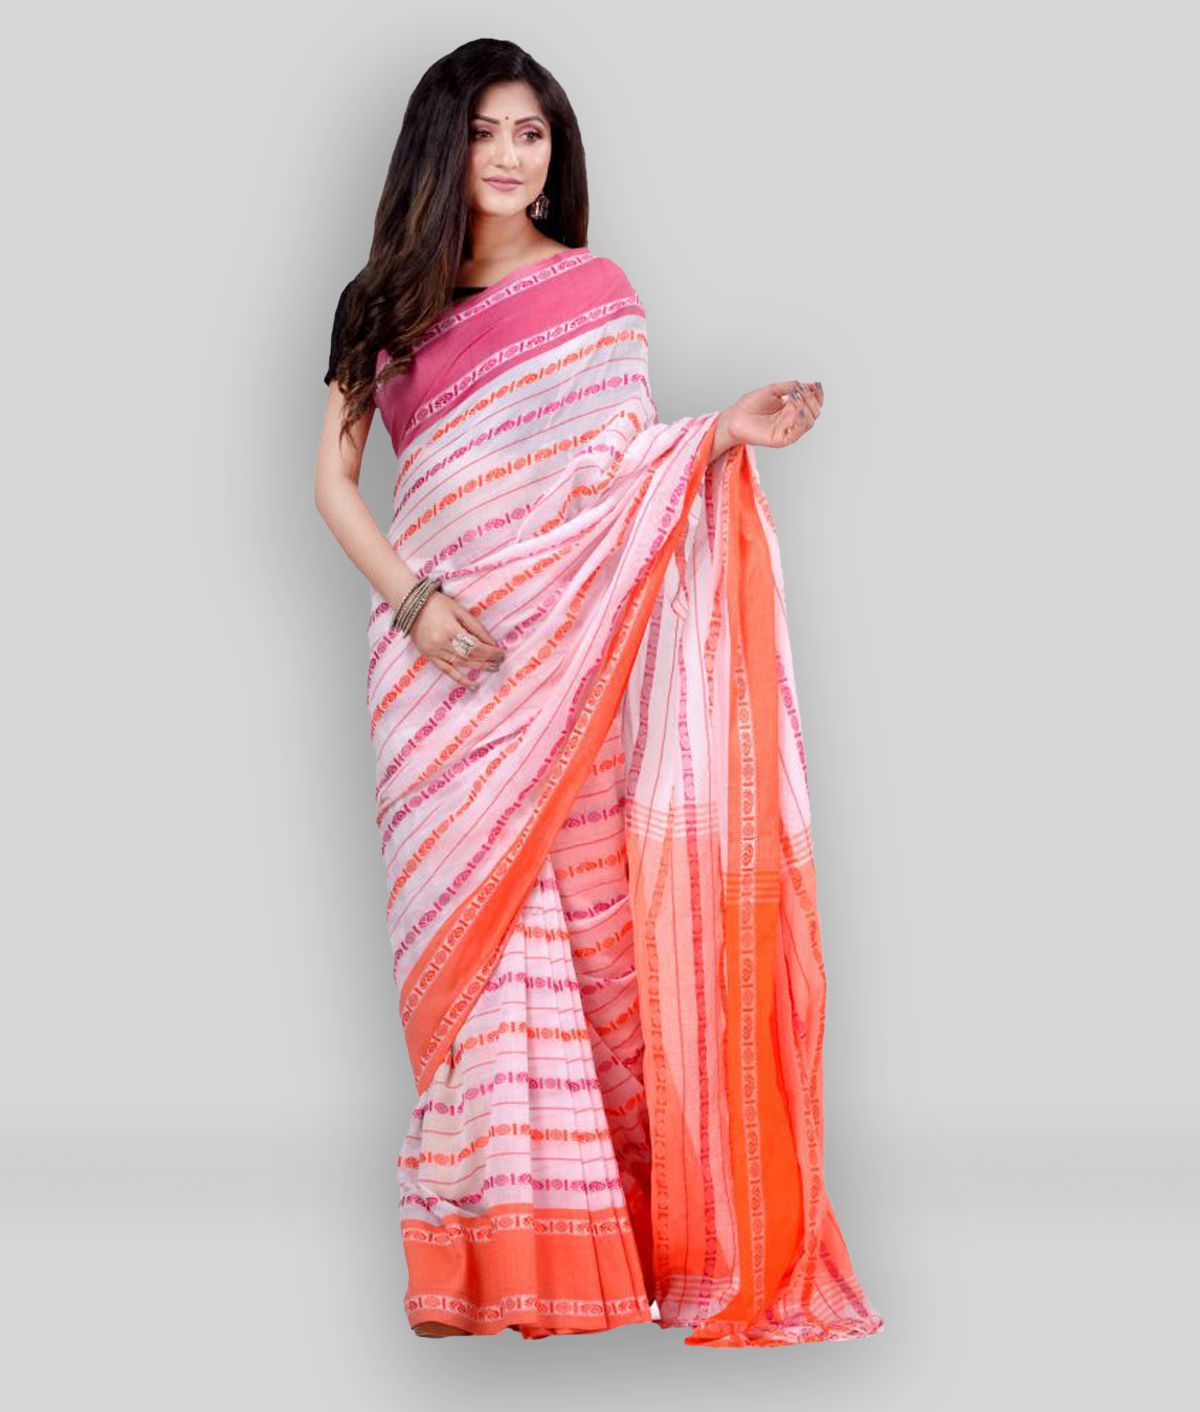     			Desh Bidesh - Pink Cotton Blend Saree With Blouse Piece ( Pack of 1 )